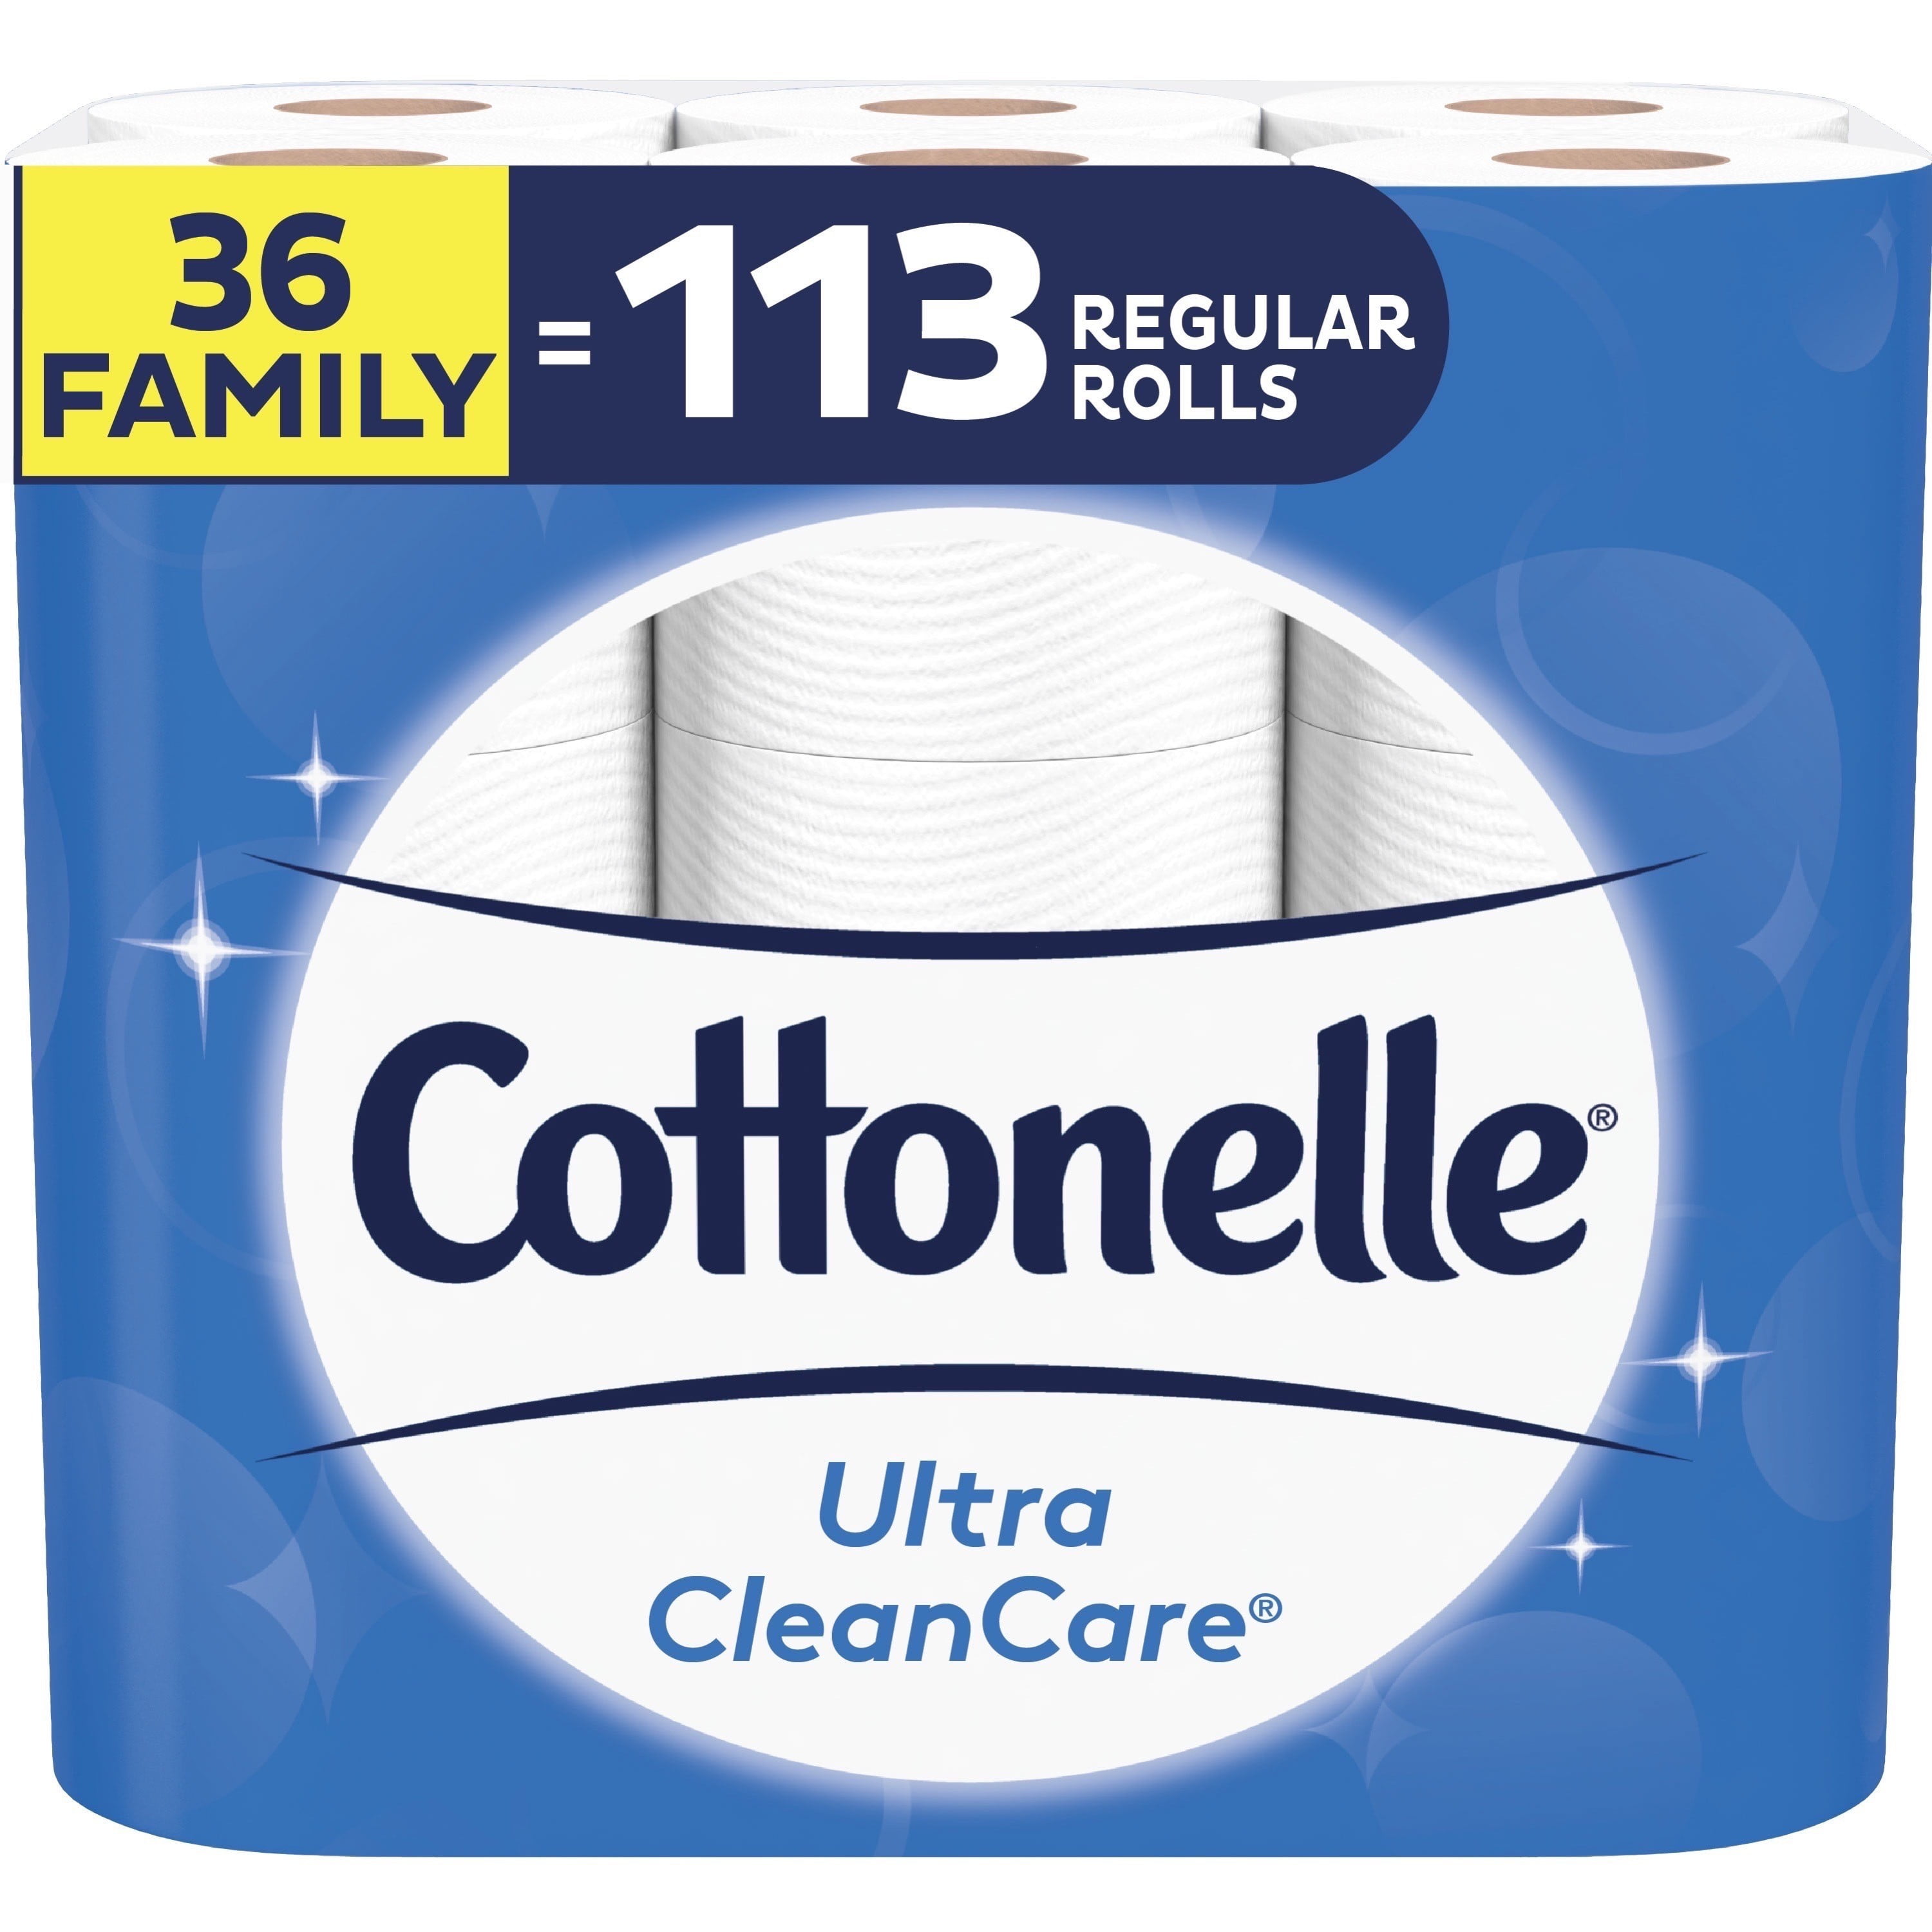 Cottonelle Ultra Clean Care Toilet Paper 36 Family Rolls Bulk Soft 